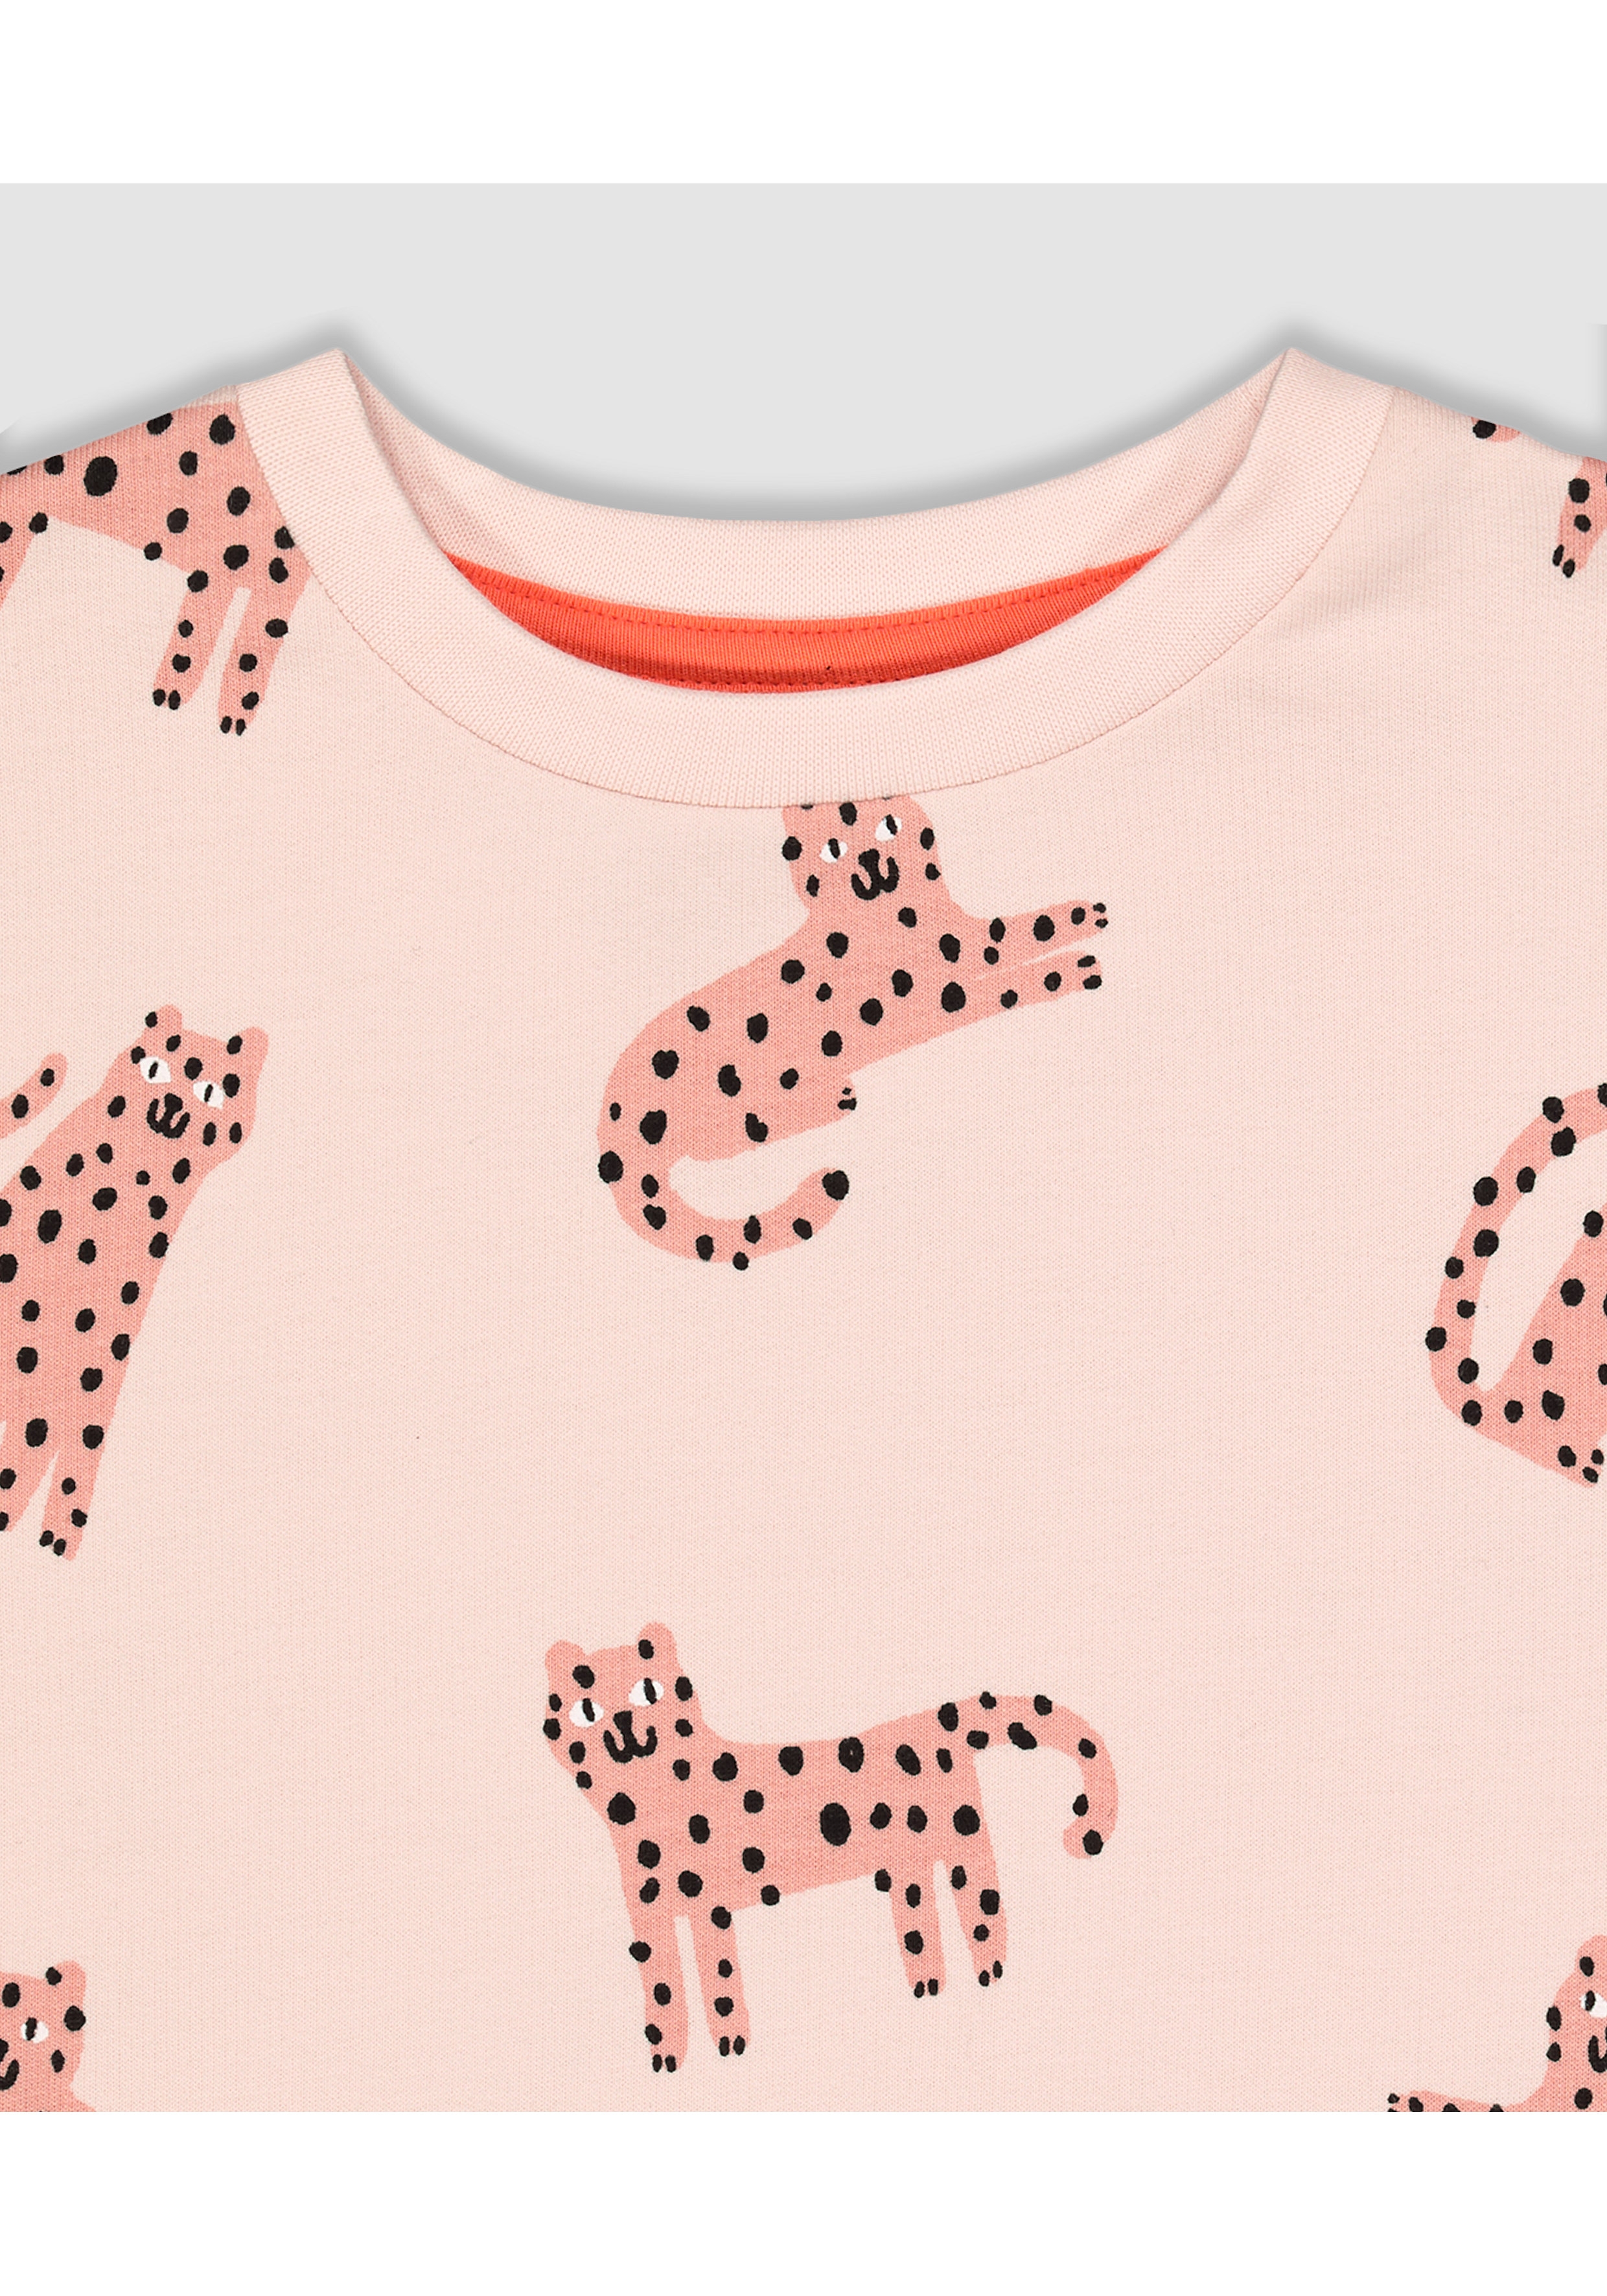 Mothercare | Girls Full Sleeves Sweatshirts  - Pink 2